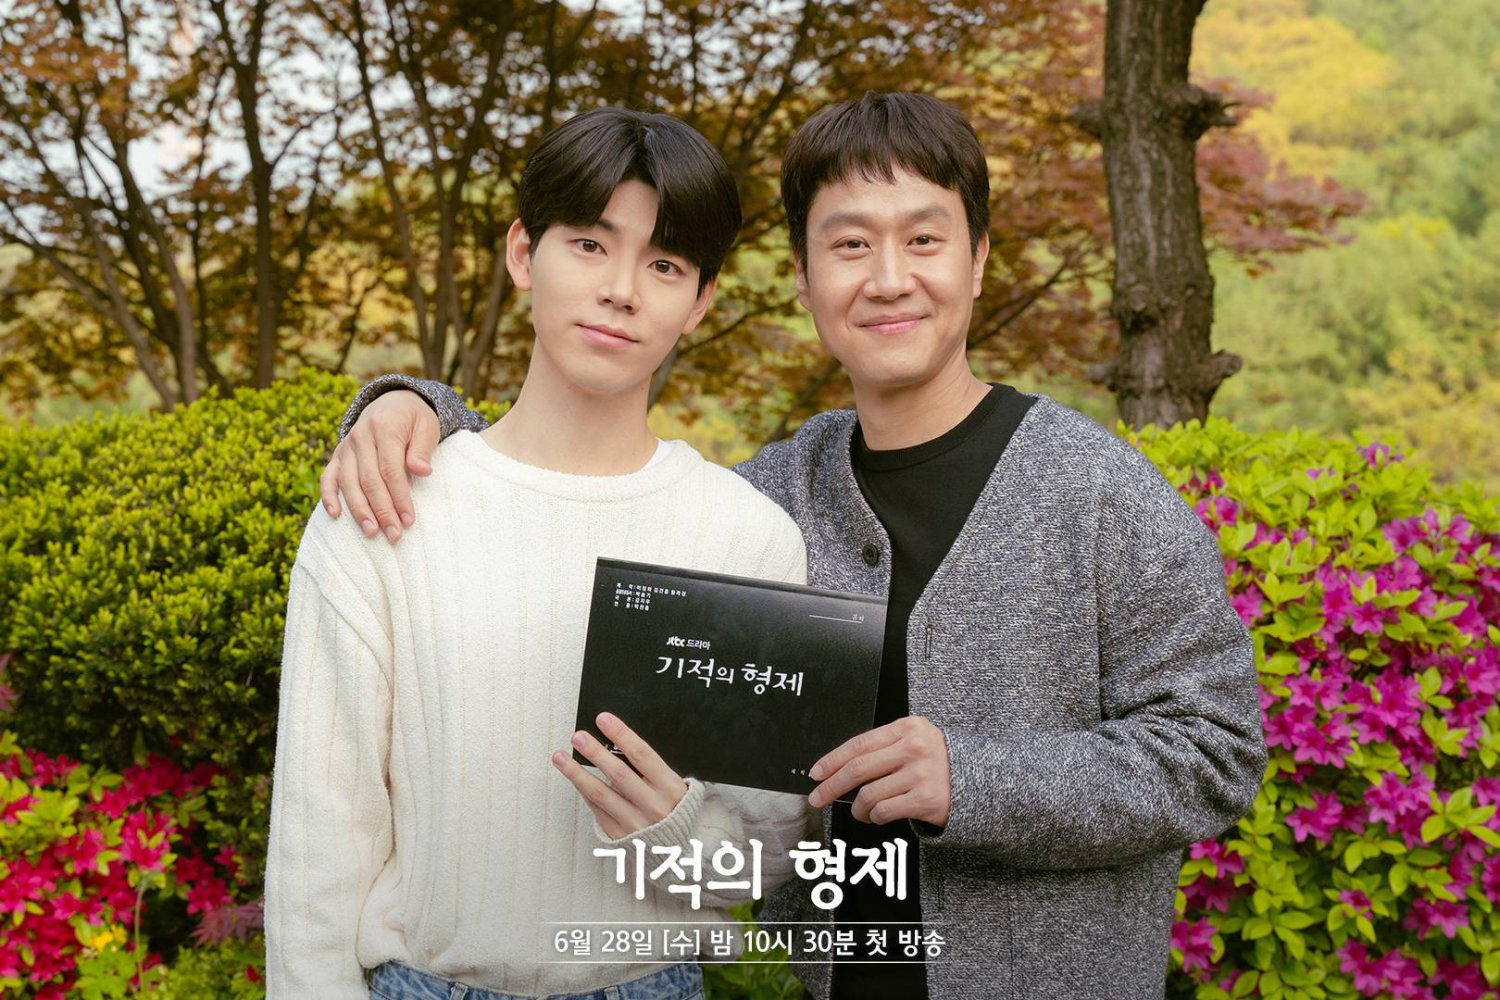 Jung Woo and Bae Hyun-sung become JTBC’s Miracle Brothers